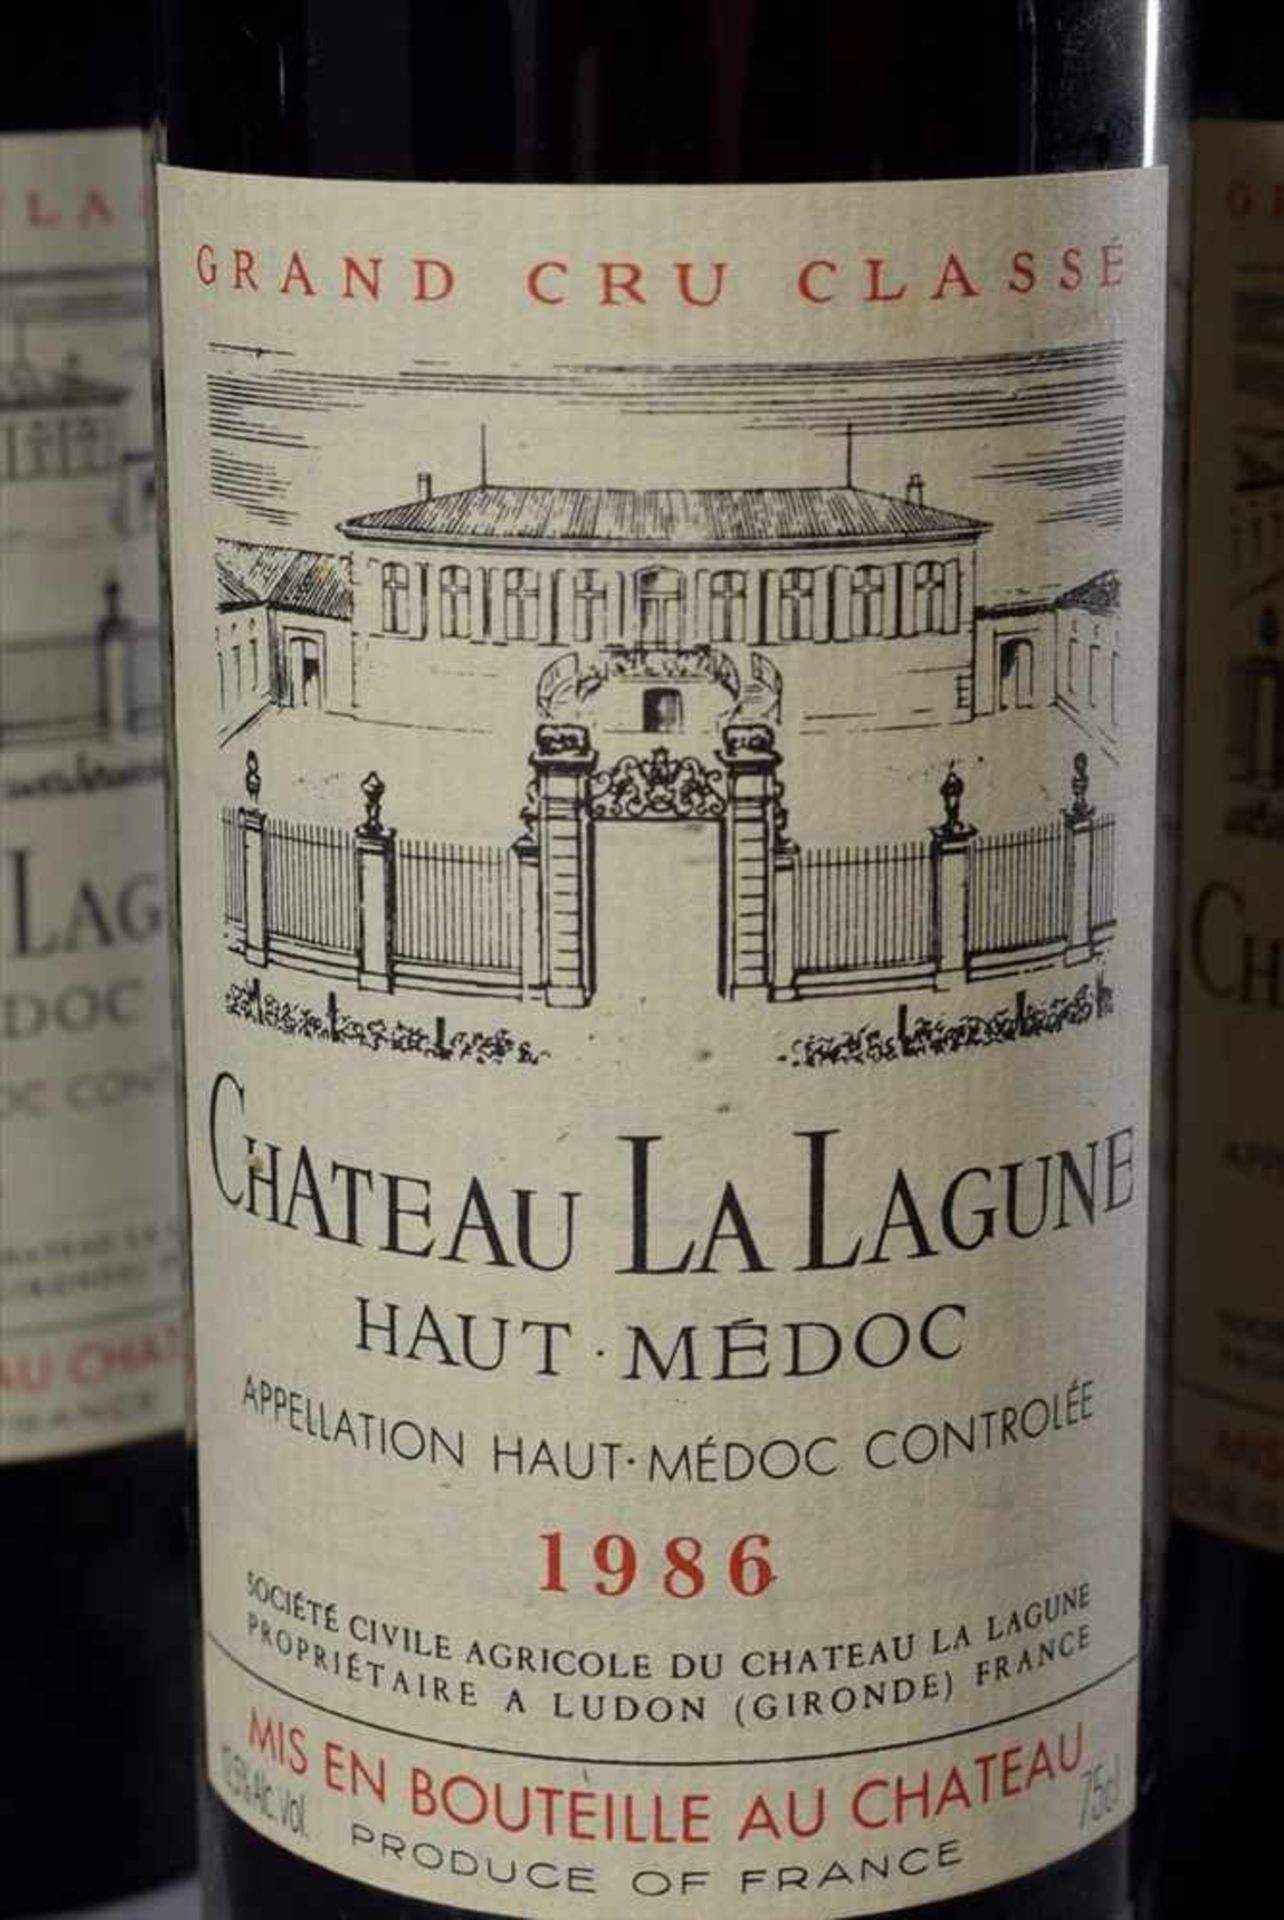 3 Flaschen Rotwein "Chateau La Lagune, Haut Medoc, Grand Cru Classé", 1986, Schlossabfüllung, - Bild 2 aus 4